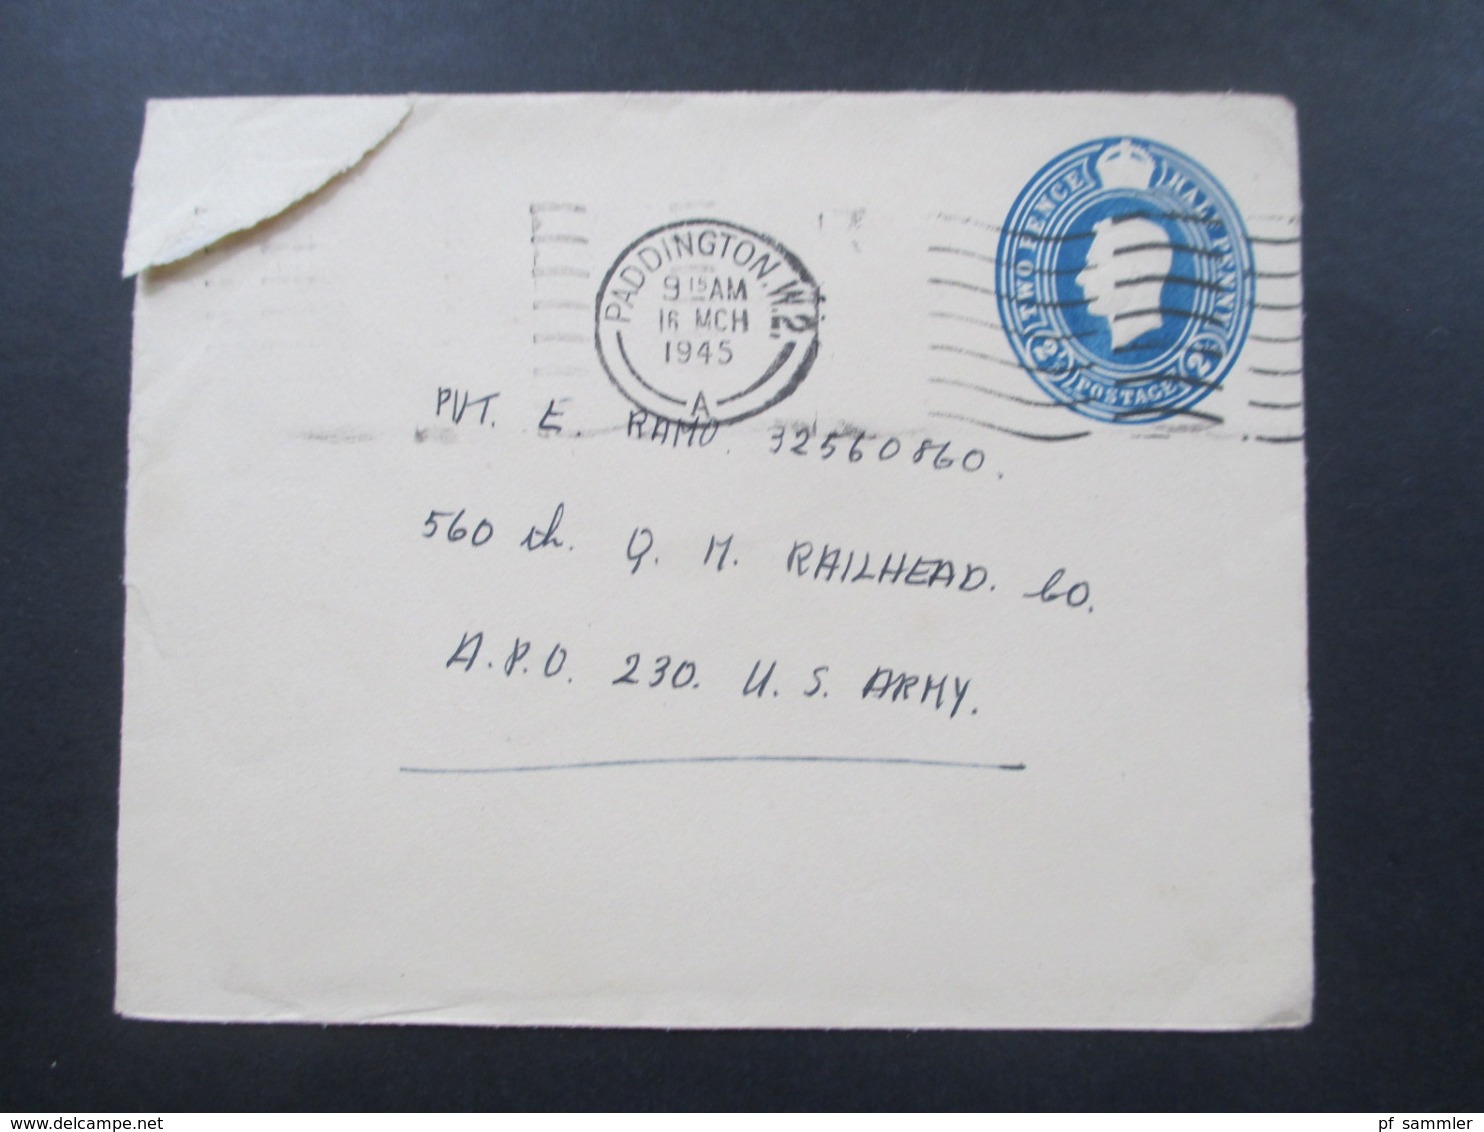 GB 16.3.1945 Die Letzten Kriegstage! GA Umschlag Paddington An Die US Army APO 230 Stempel US Army Postal Service - Covers & Documents